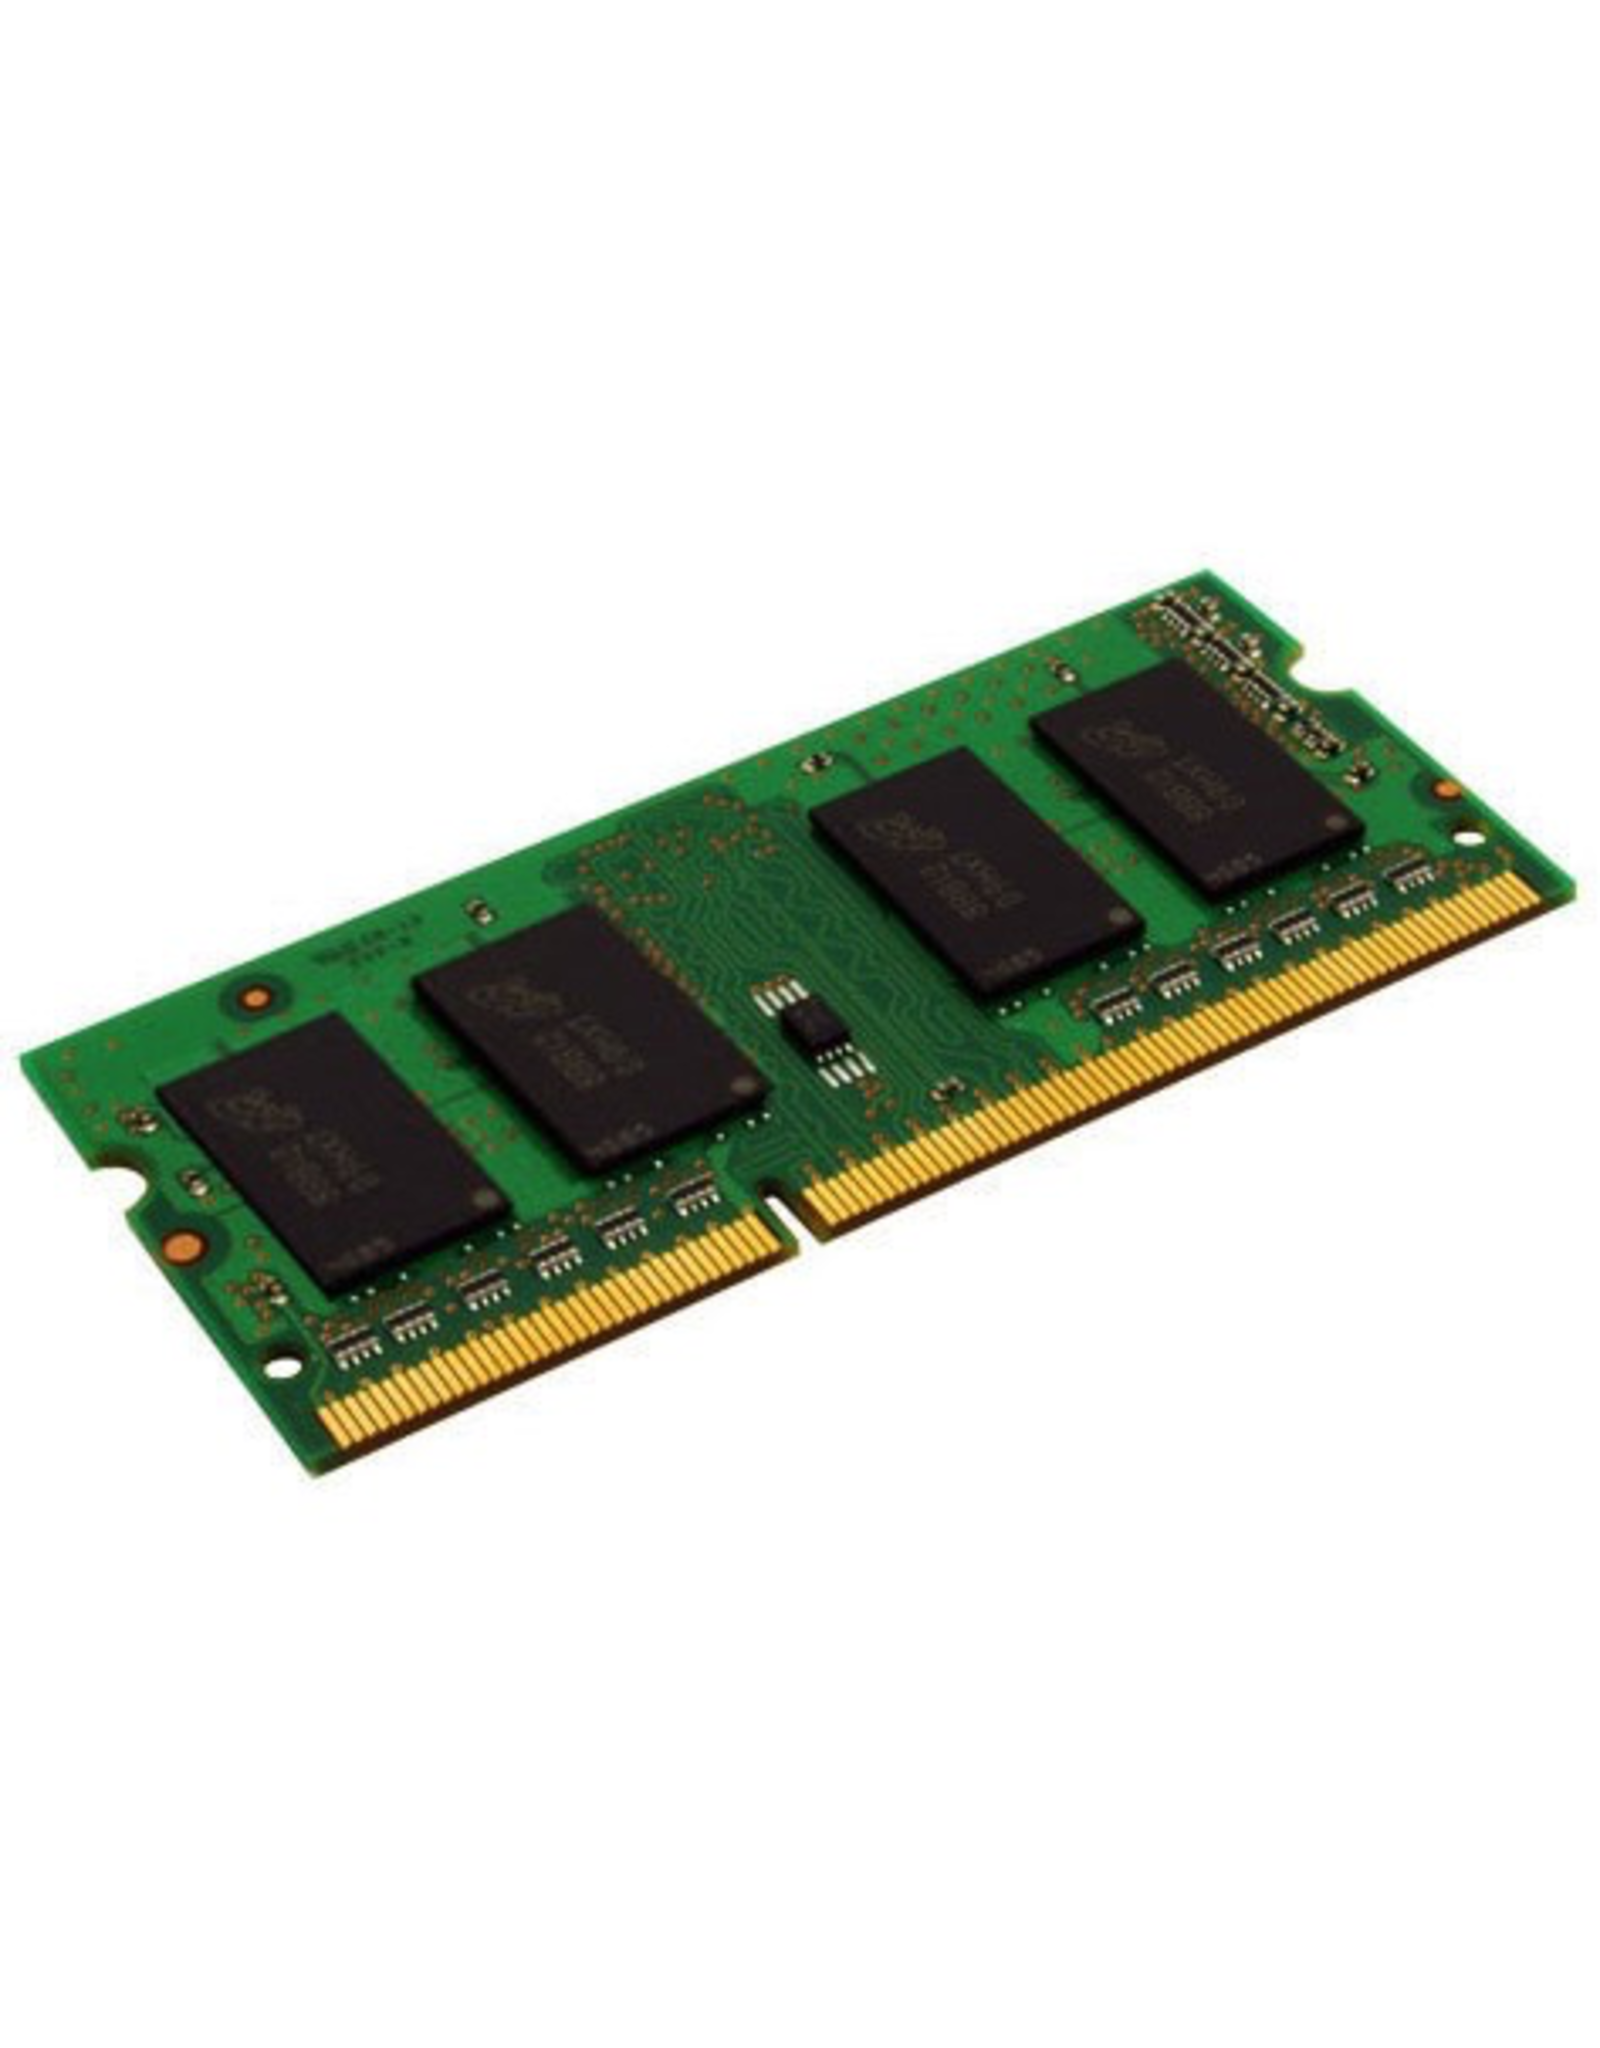 iLove Computers 8GB 1866Mhz (PC14900) DDR3 SODIMM 204 pin RAM Module